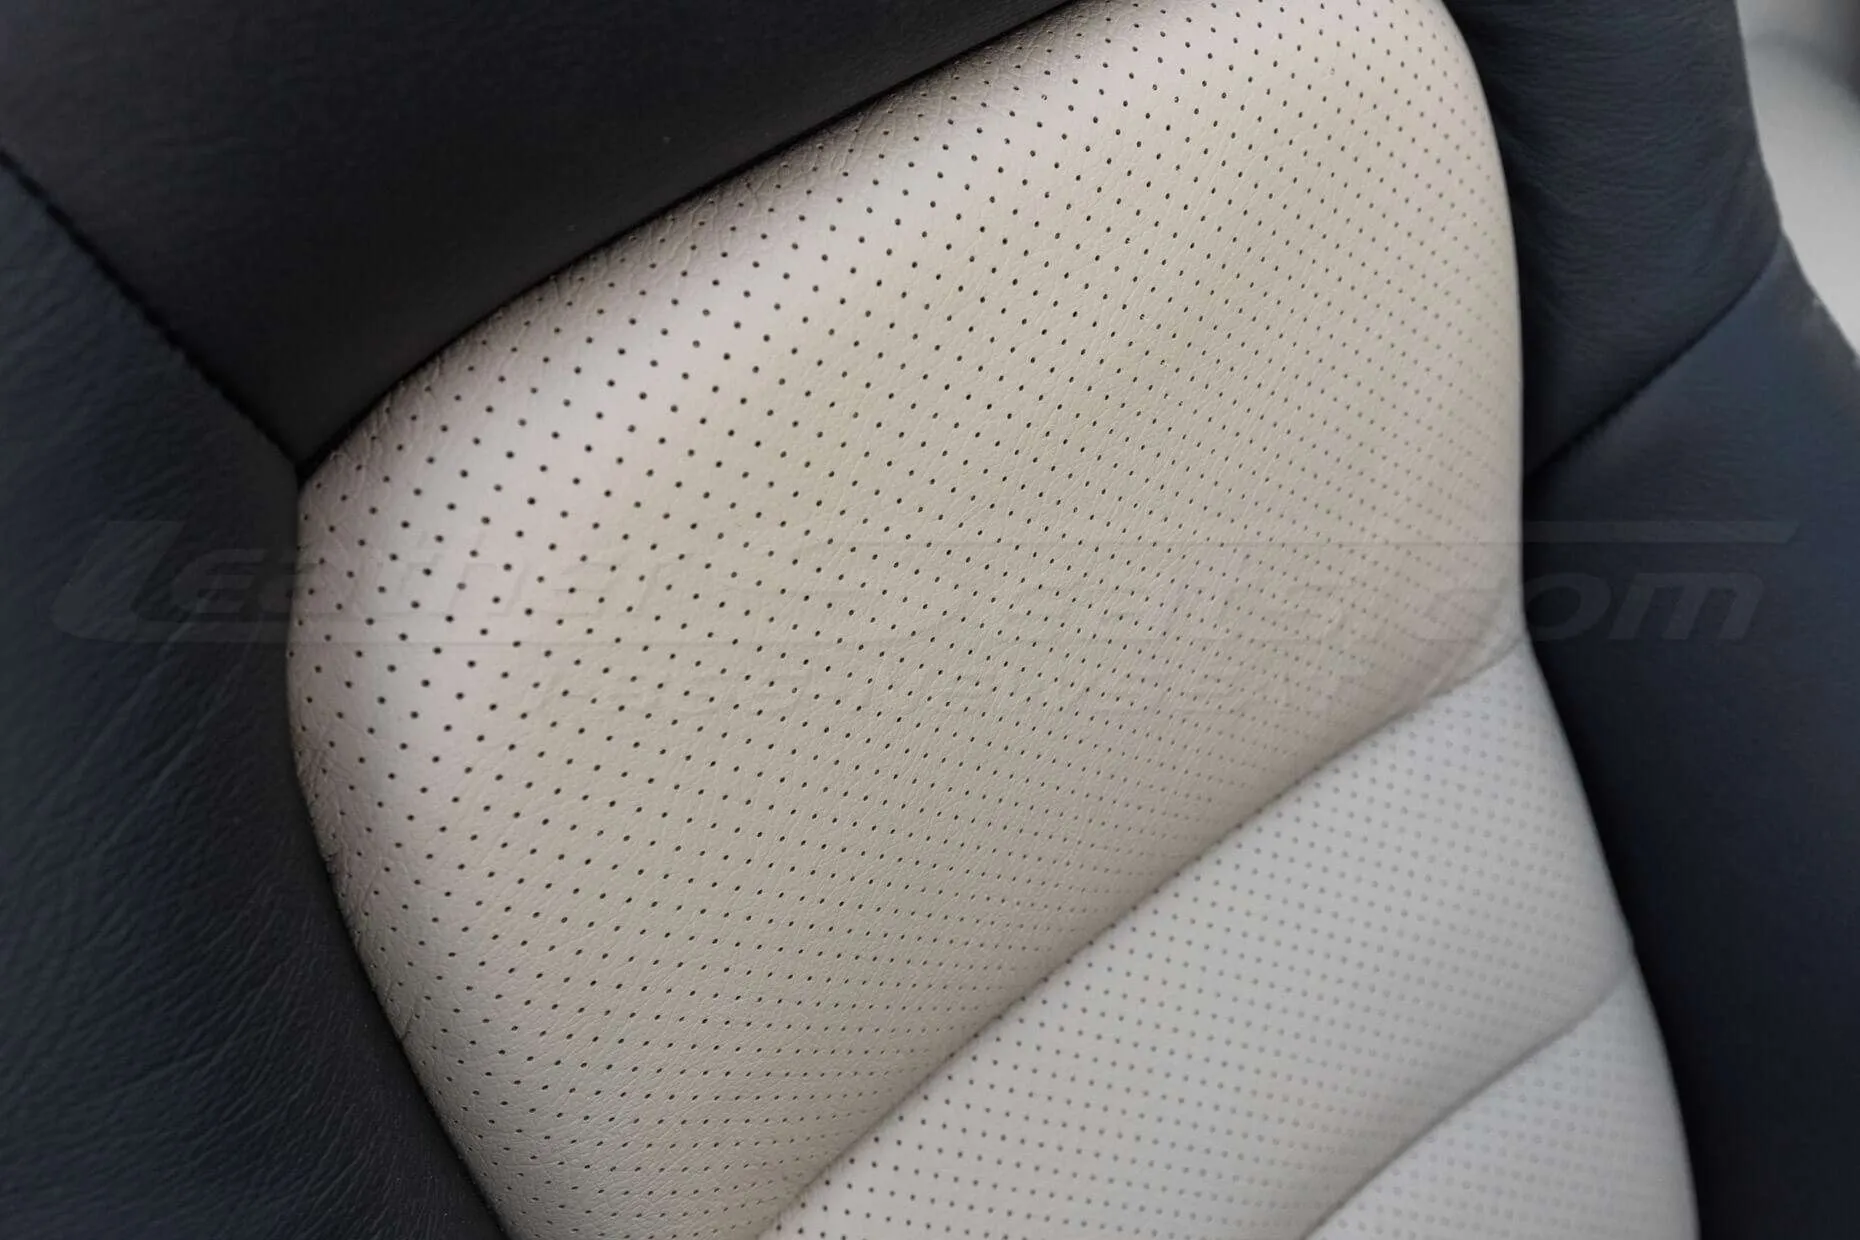 Installed 05-11 Chevrolet Corvette Leather Kit - Black & Sandstone - Perforation close up